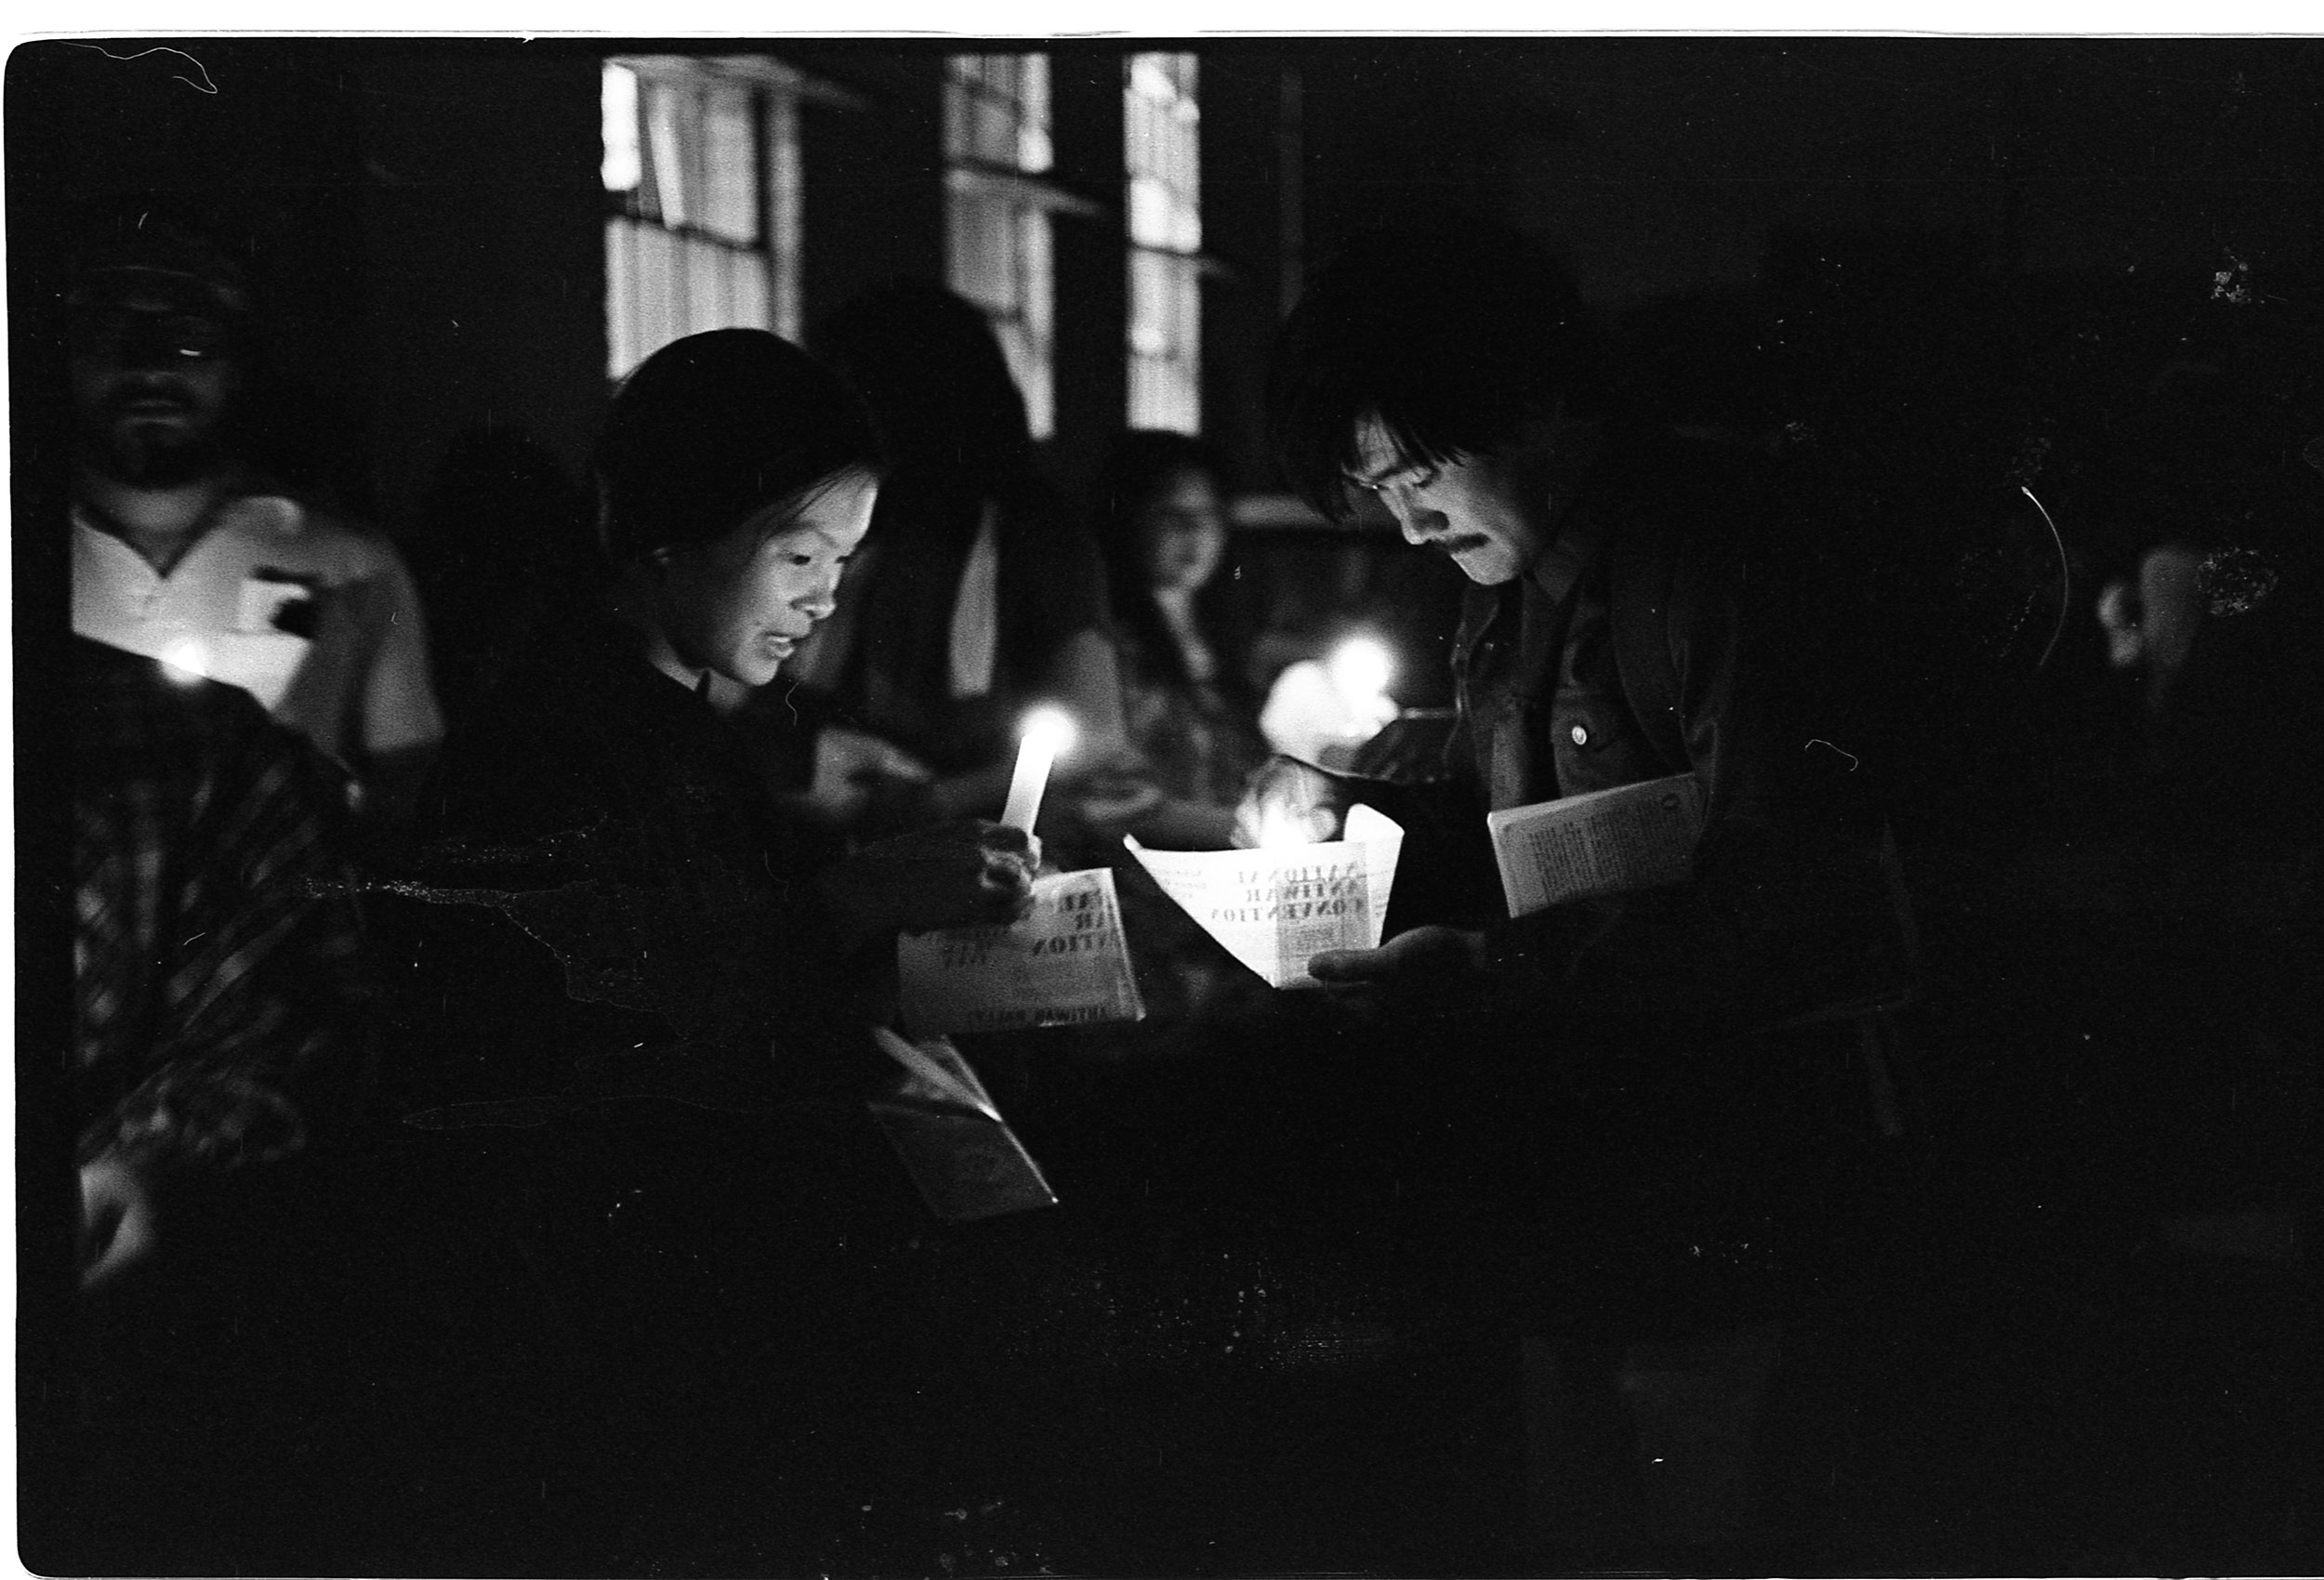 Hiroshima/Nagasaki Candlelight Vigils (1972)